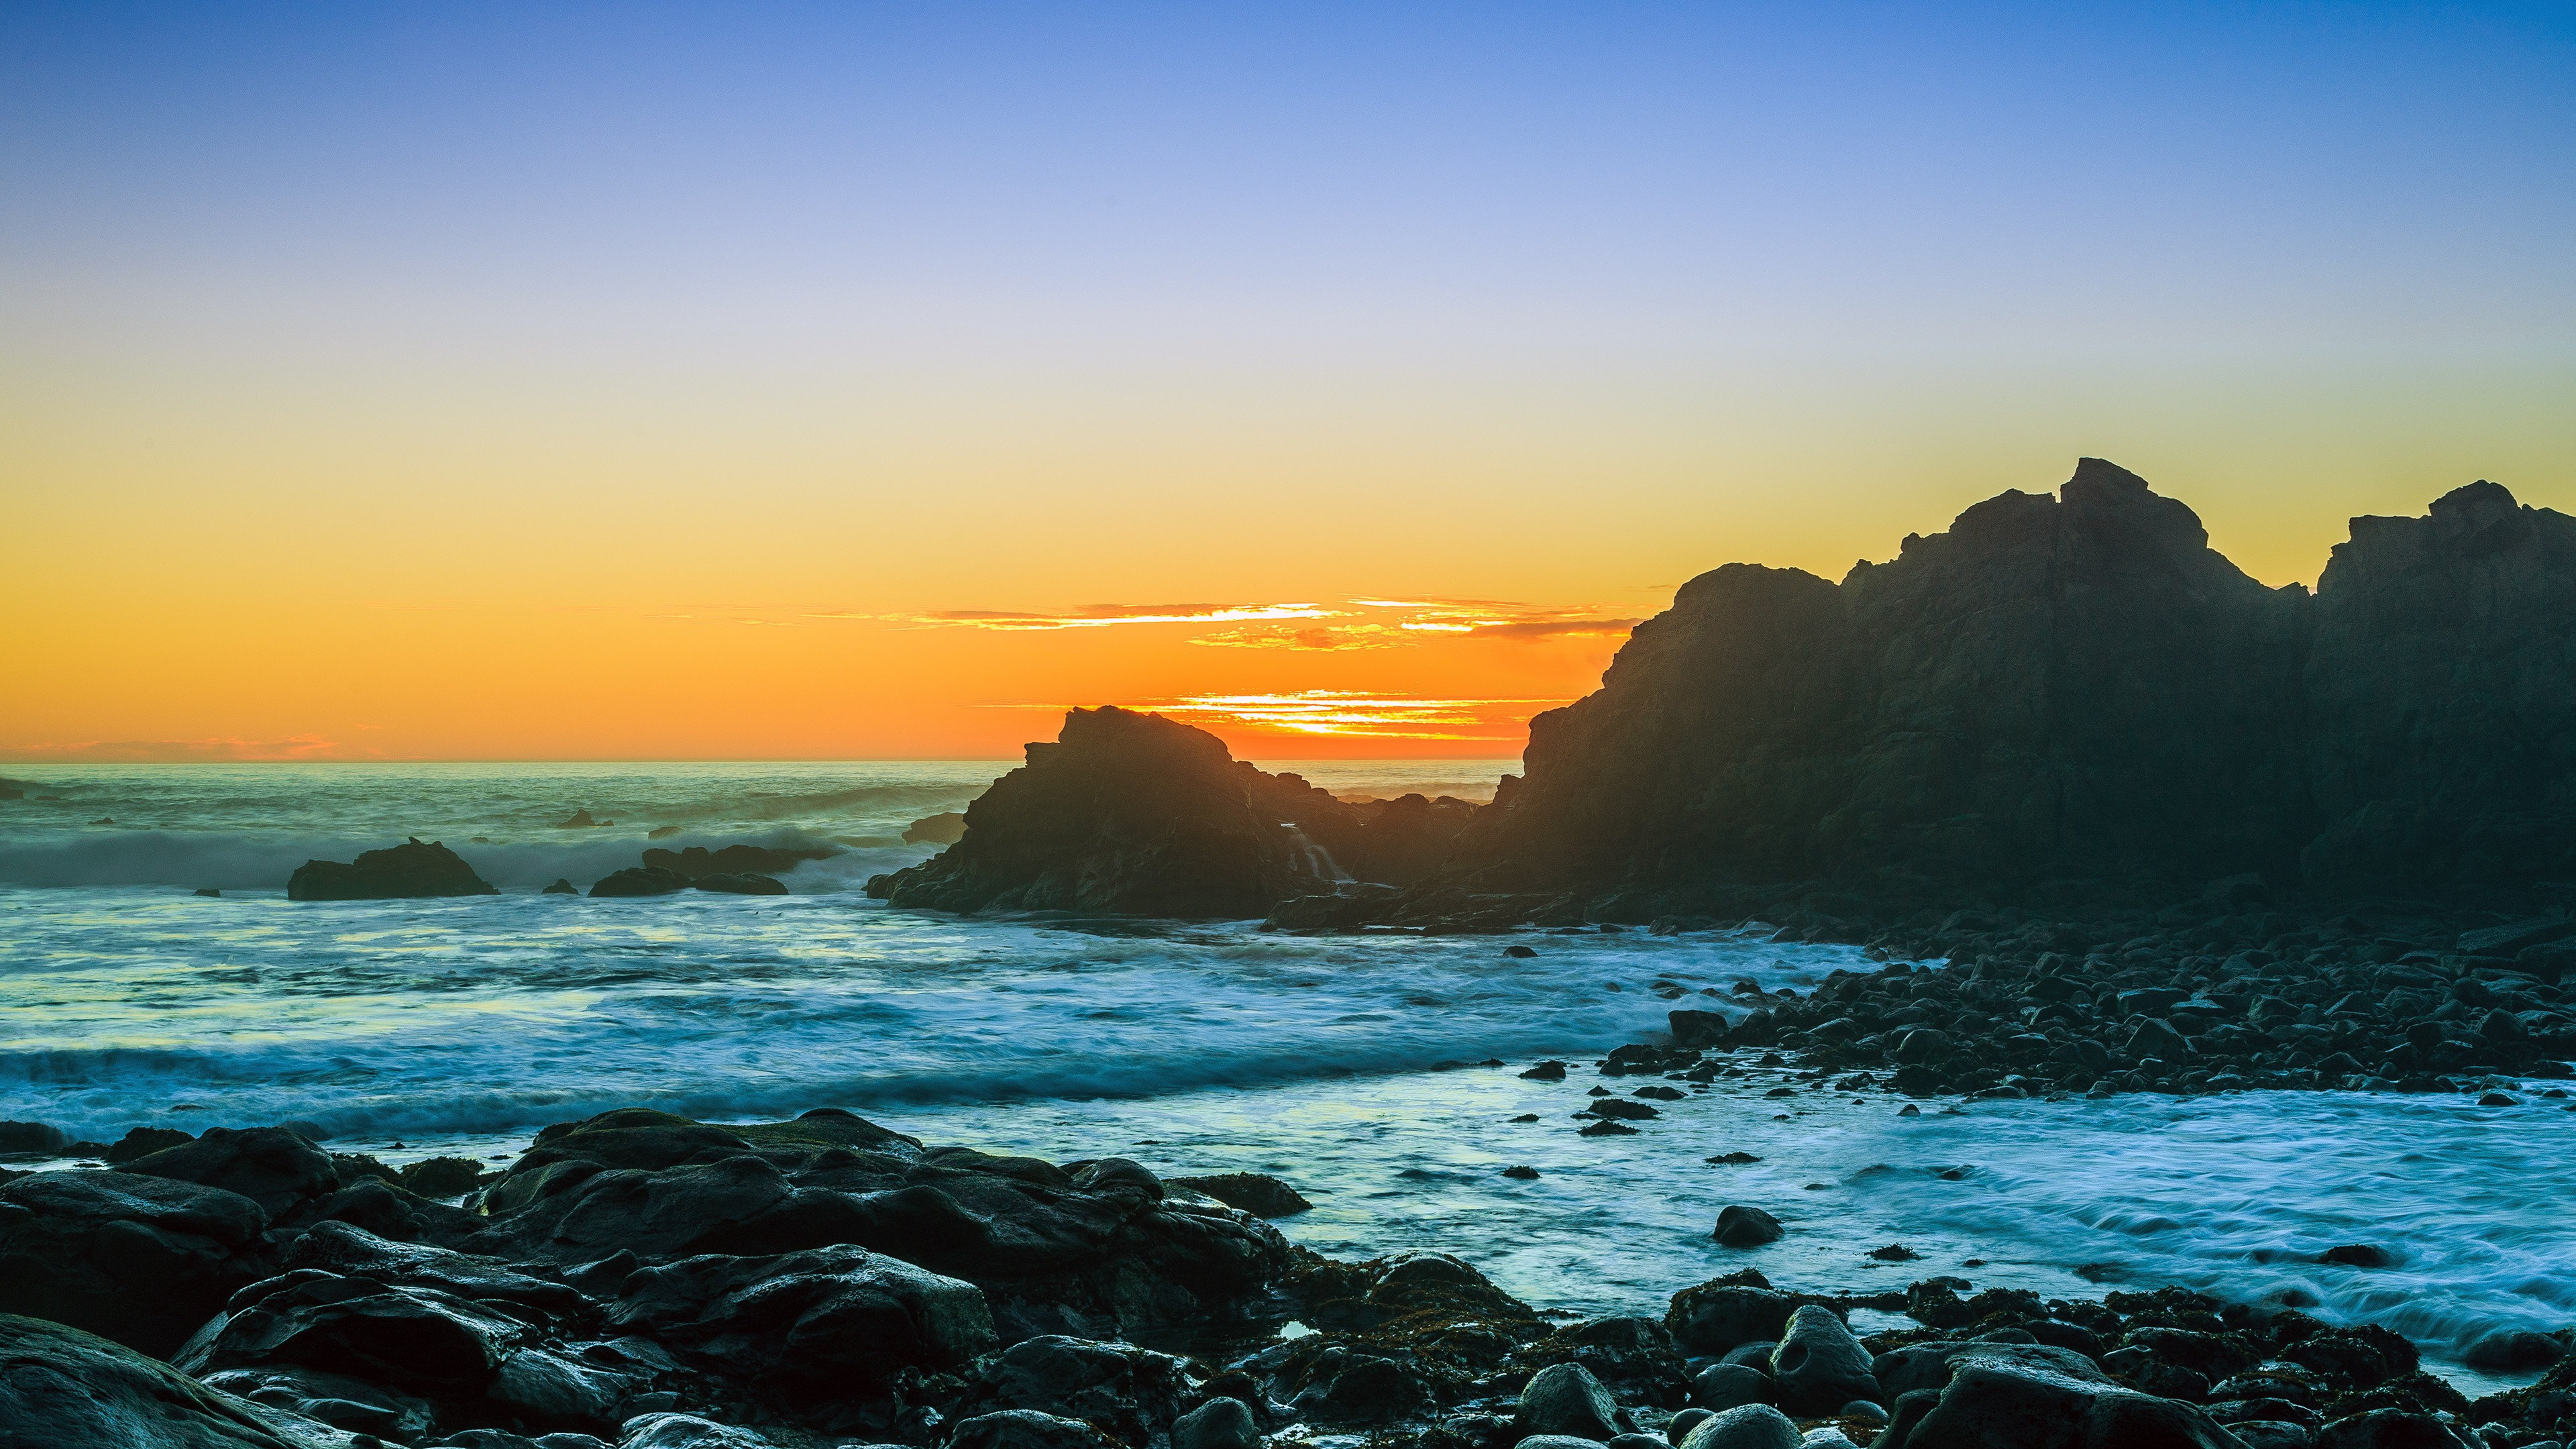 Ocean Waves Crashing on Rocks During Sunset. Wallpaper in 3840x2160 Resolution